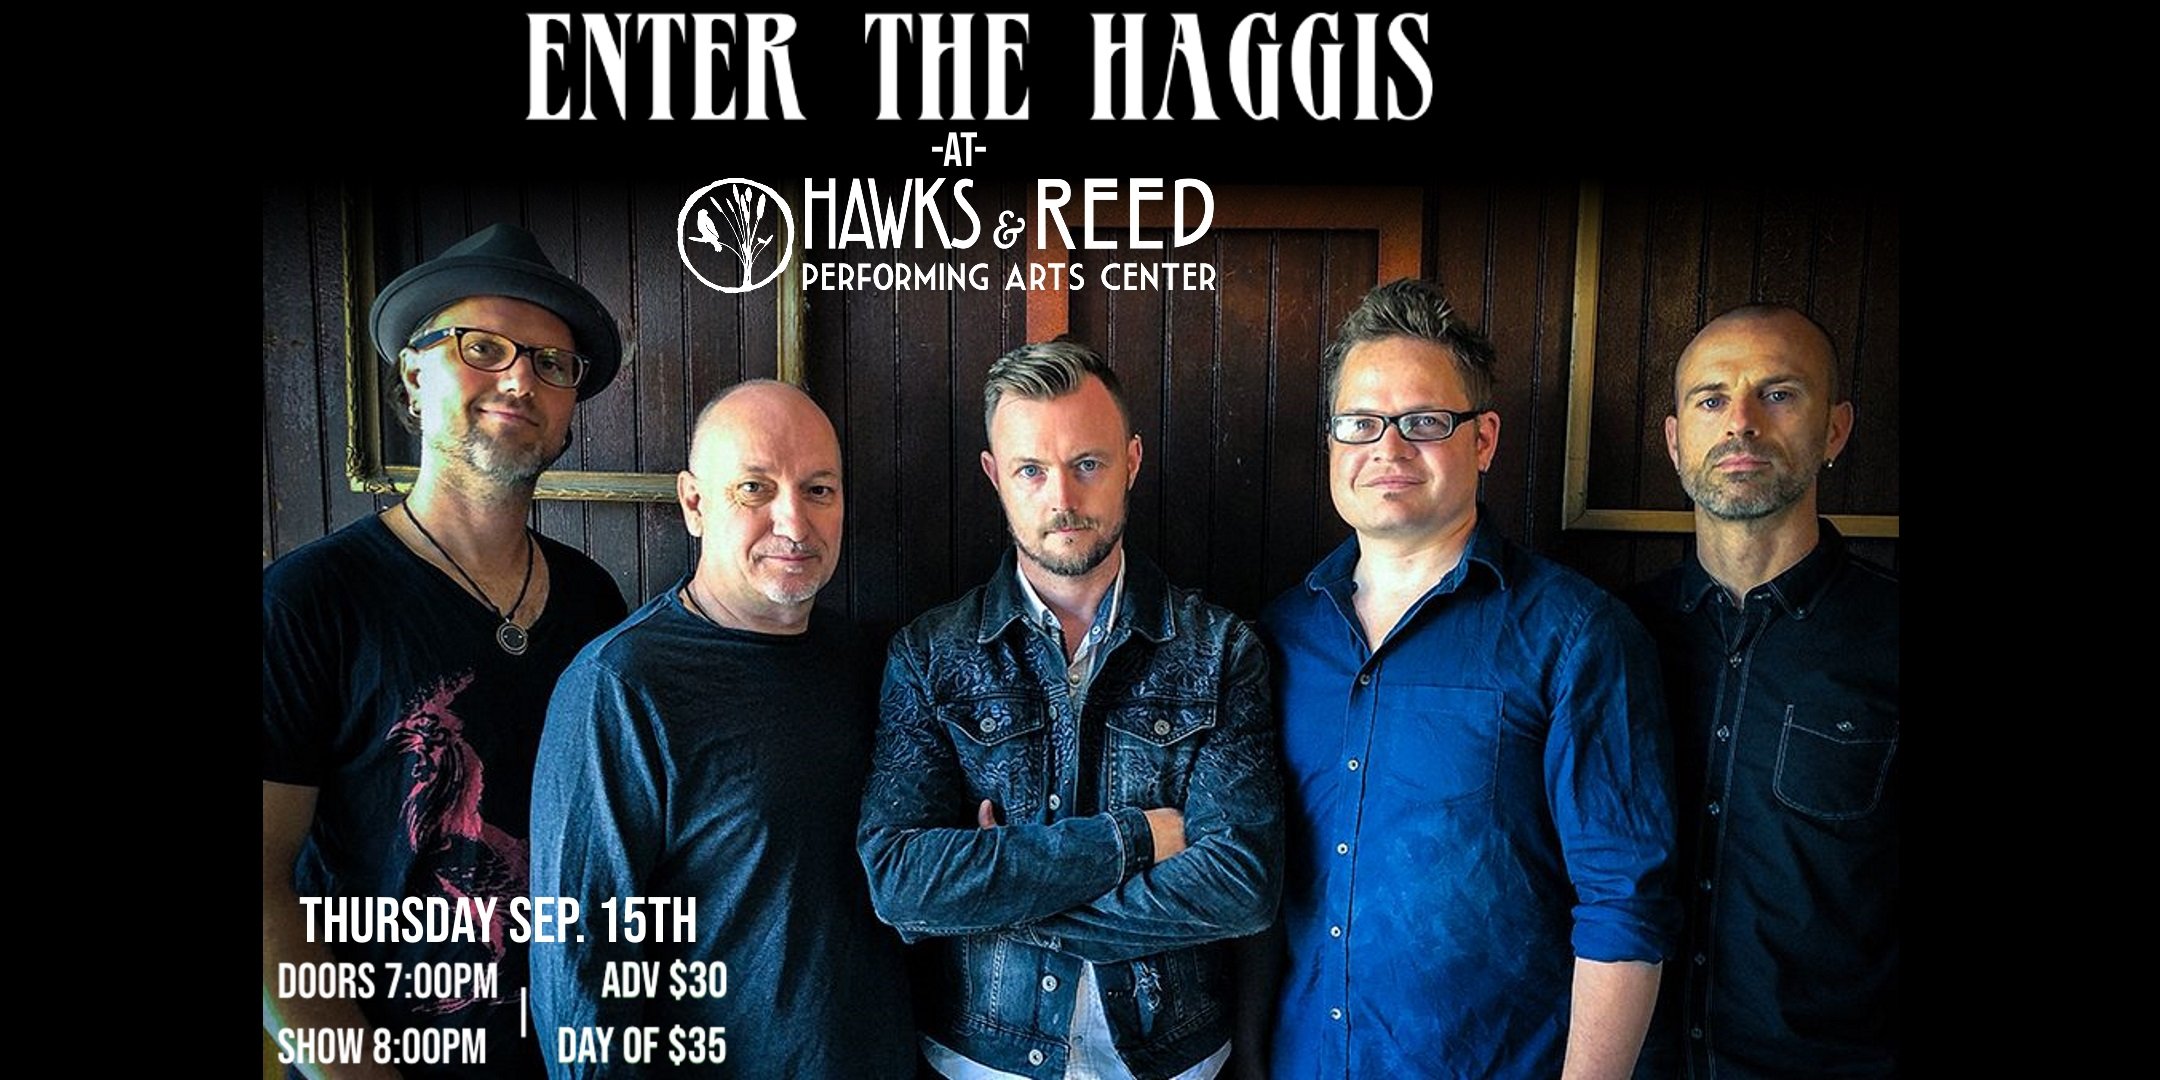 Enter the Haggis at Hawks & Reed